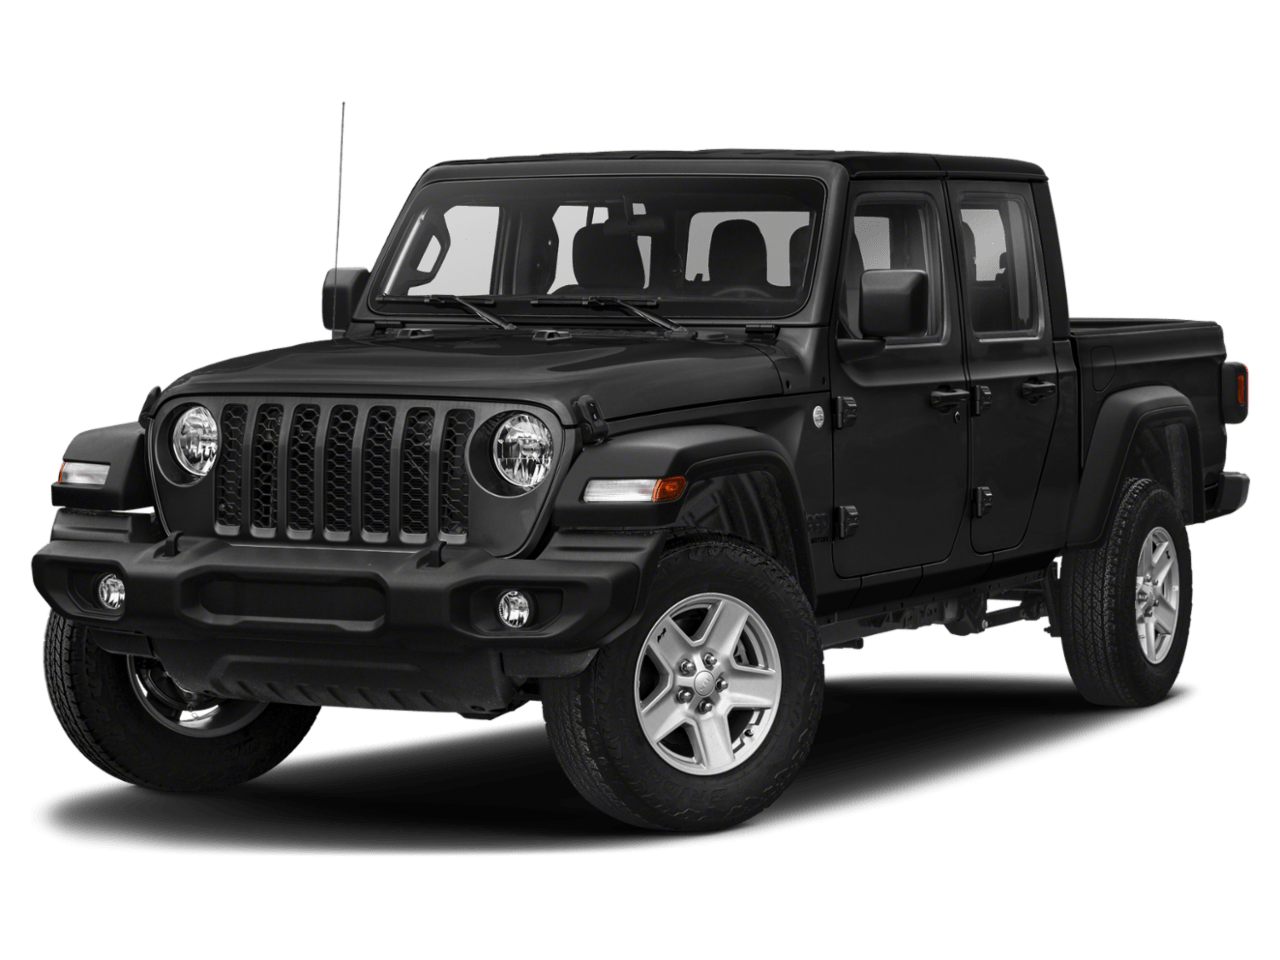 2021 Jeep Gladiator Model